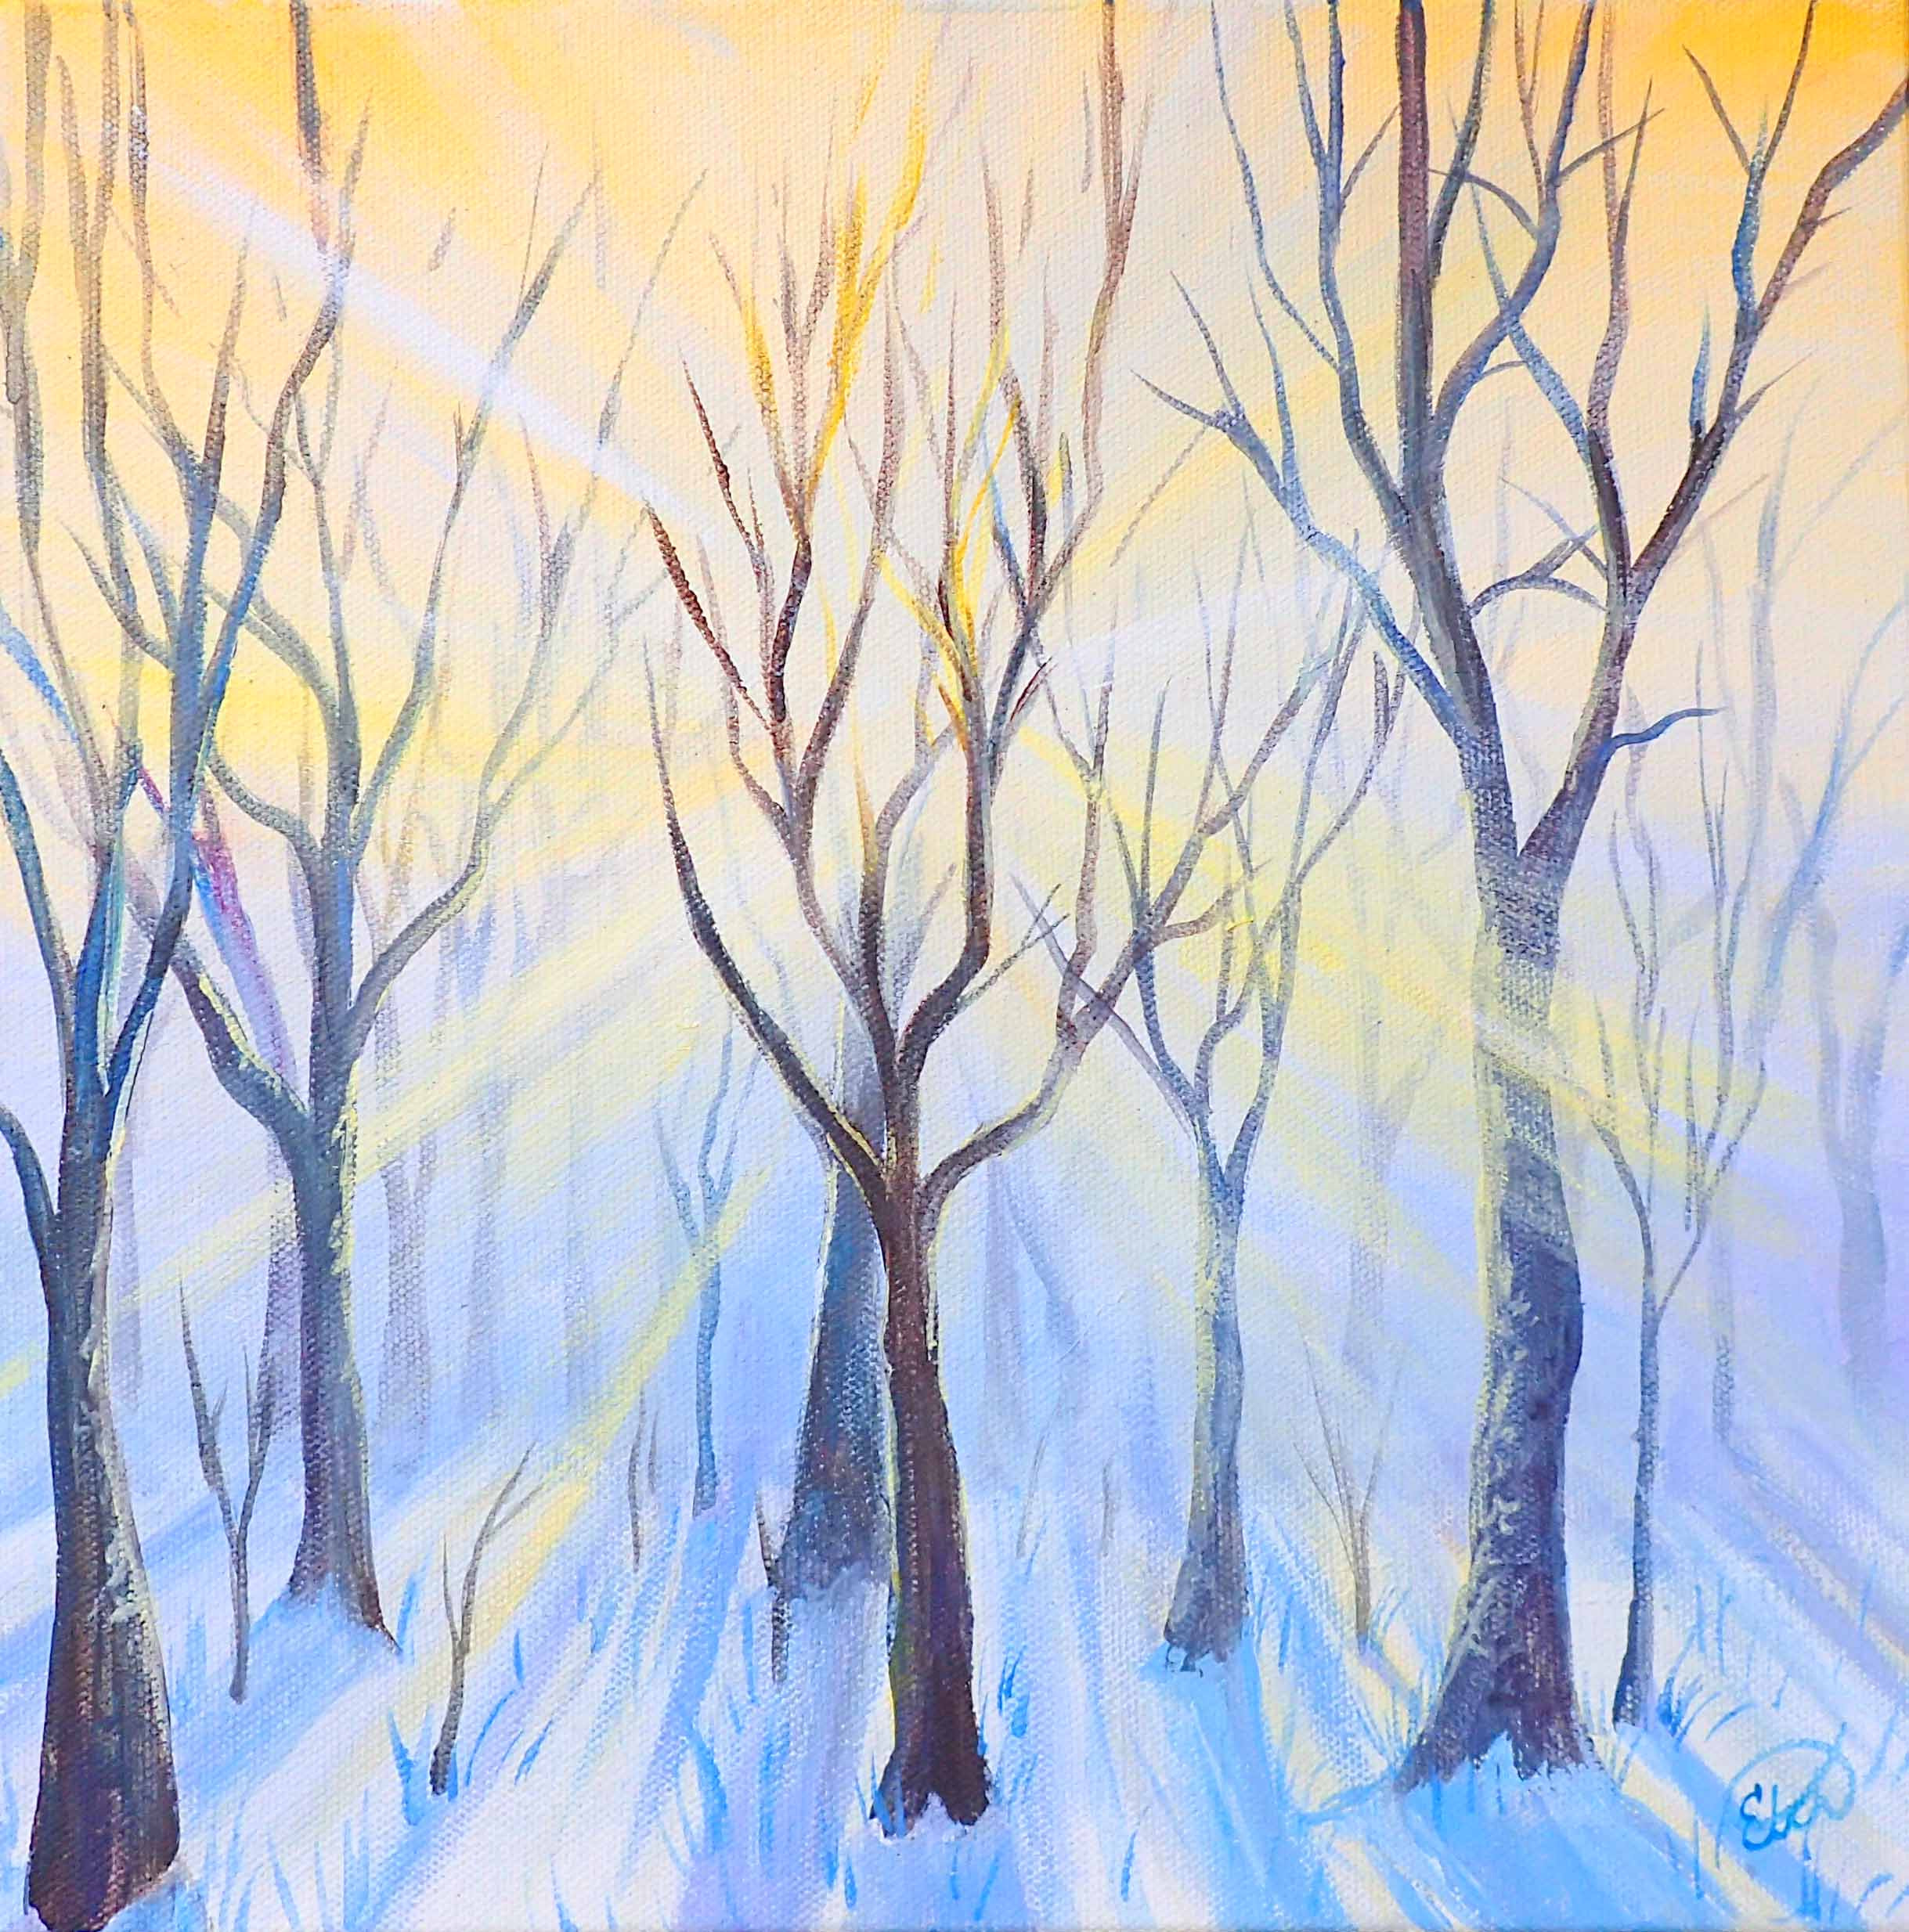 Winter morning sunlight through trees painting lifl2o